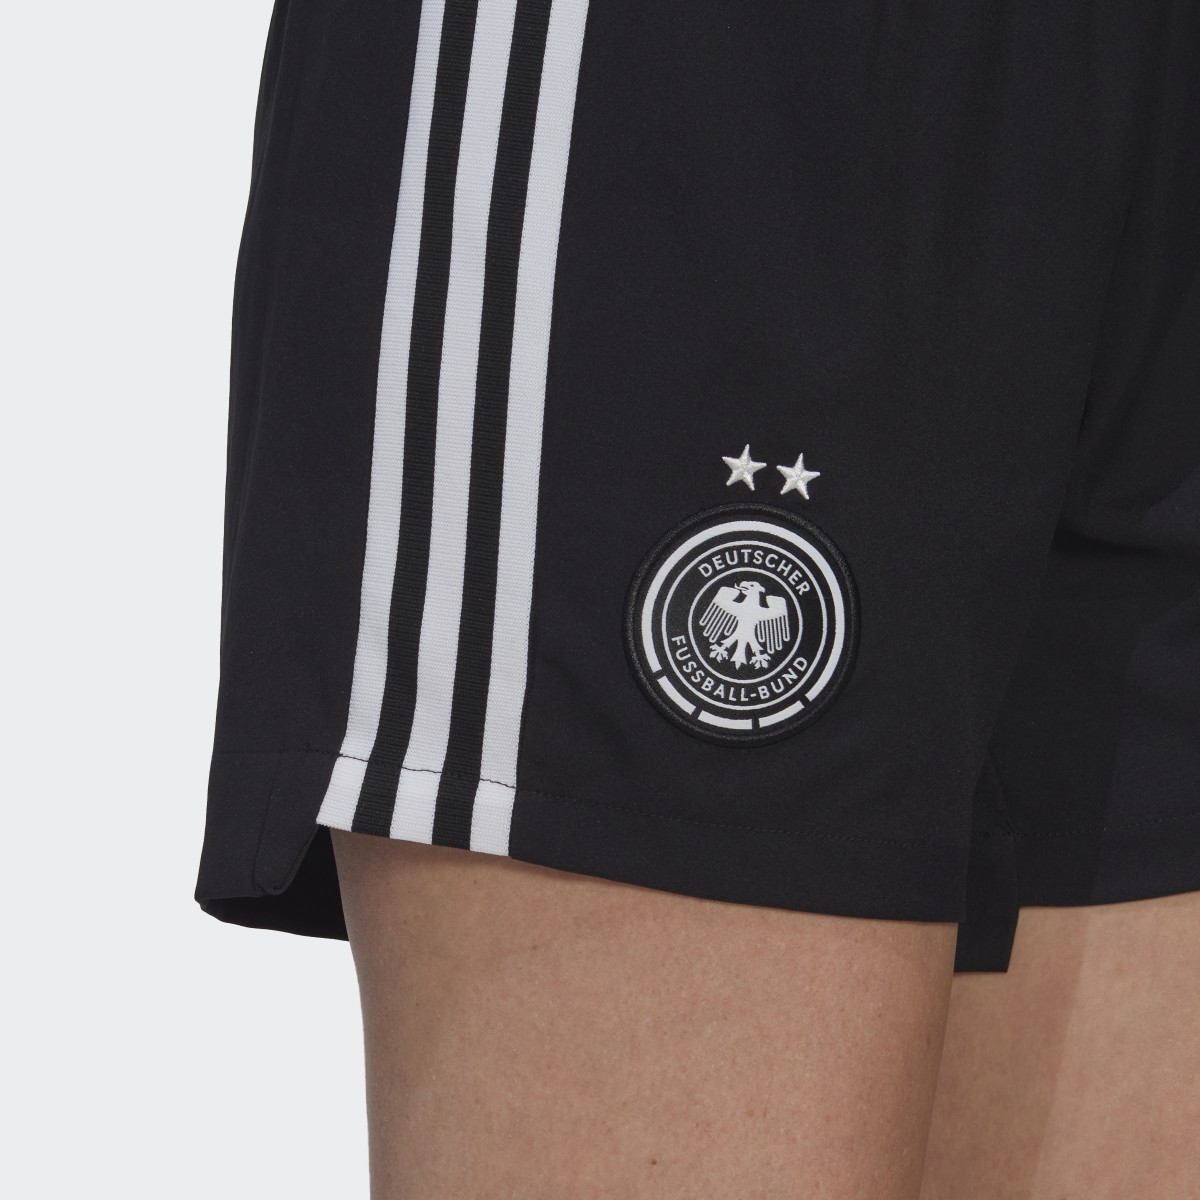 Adidas Germany 21/22 Home Shorts. 5